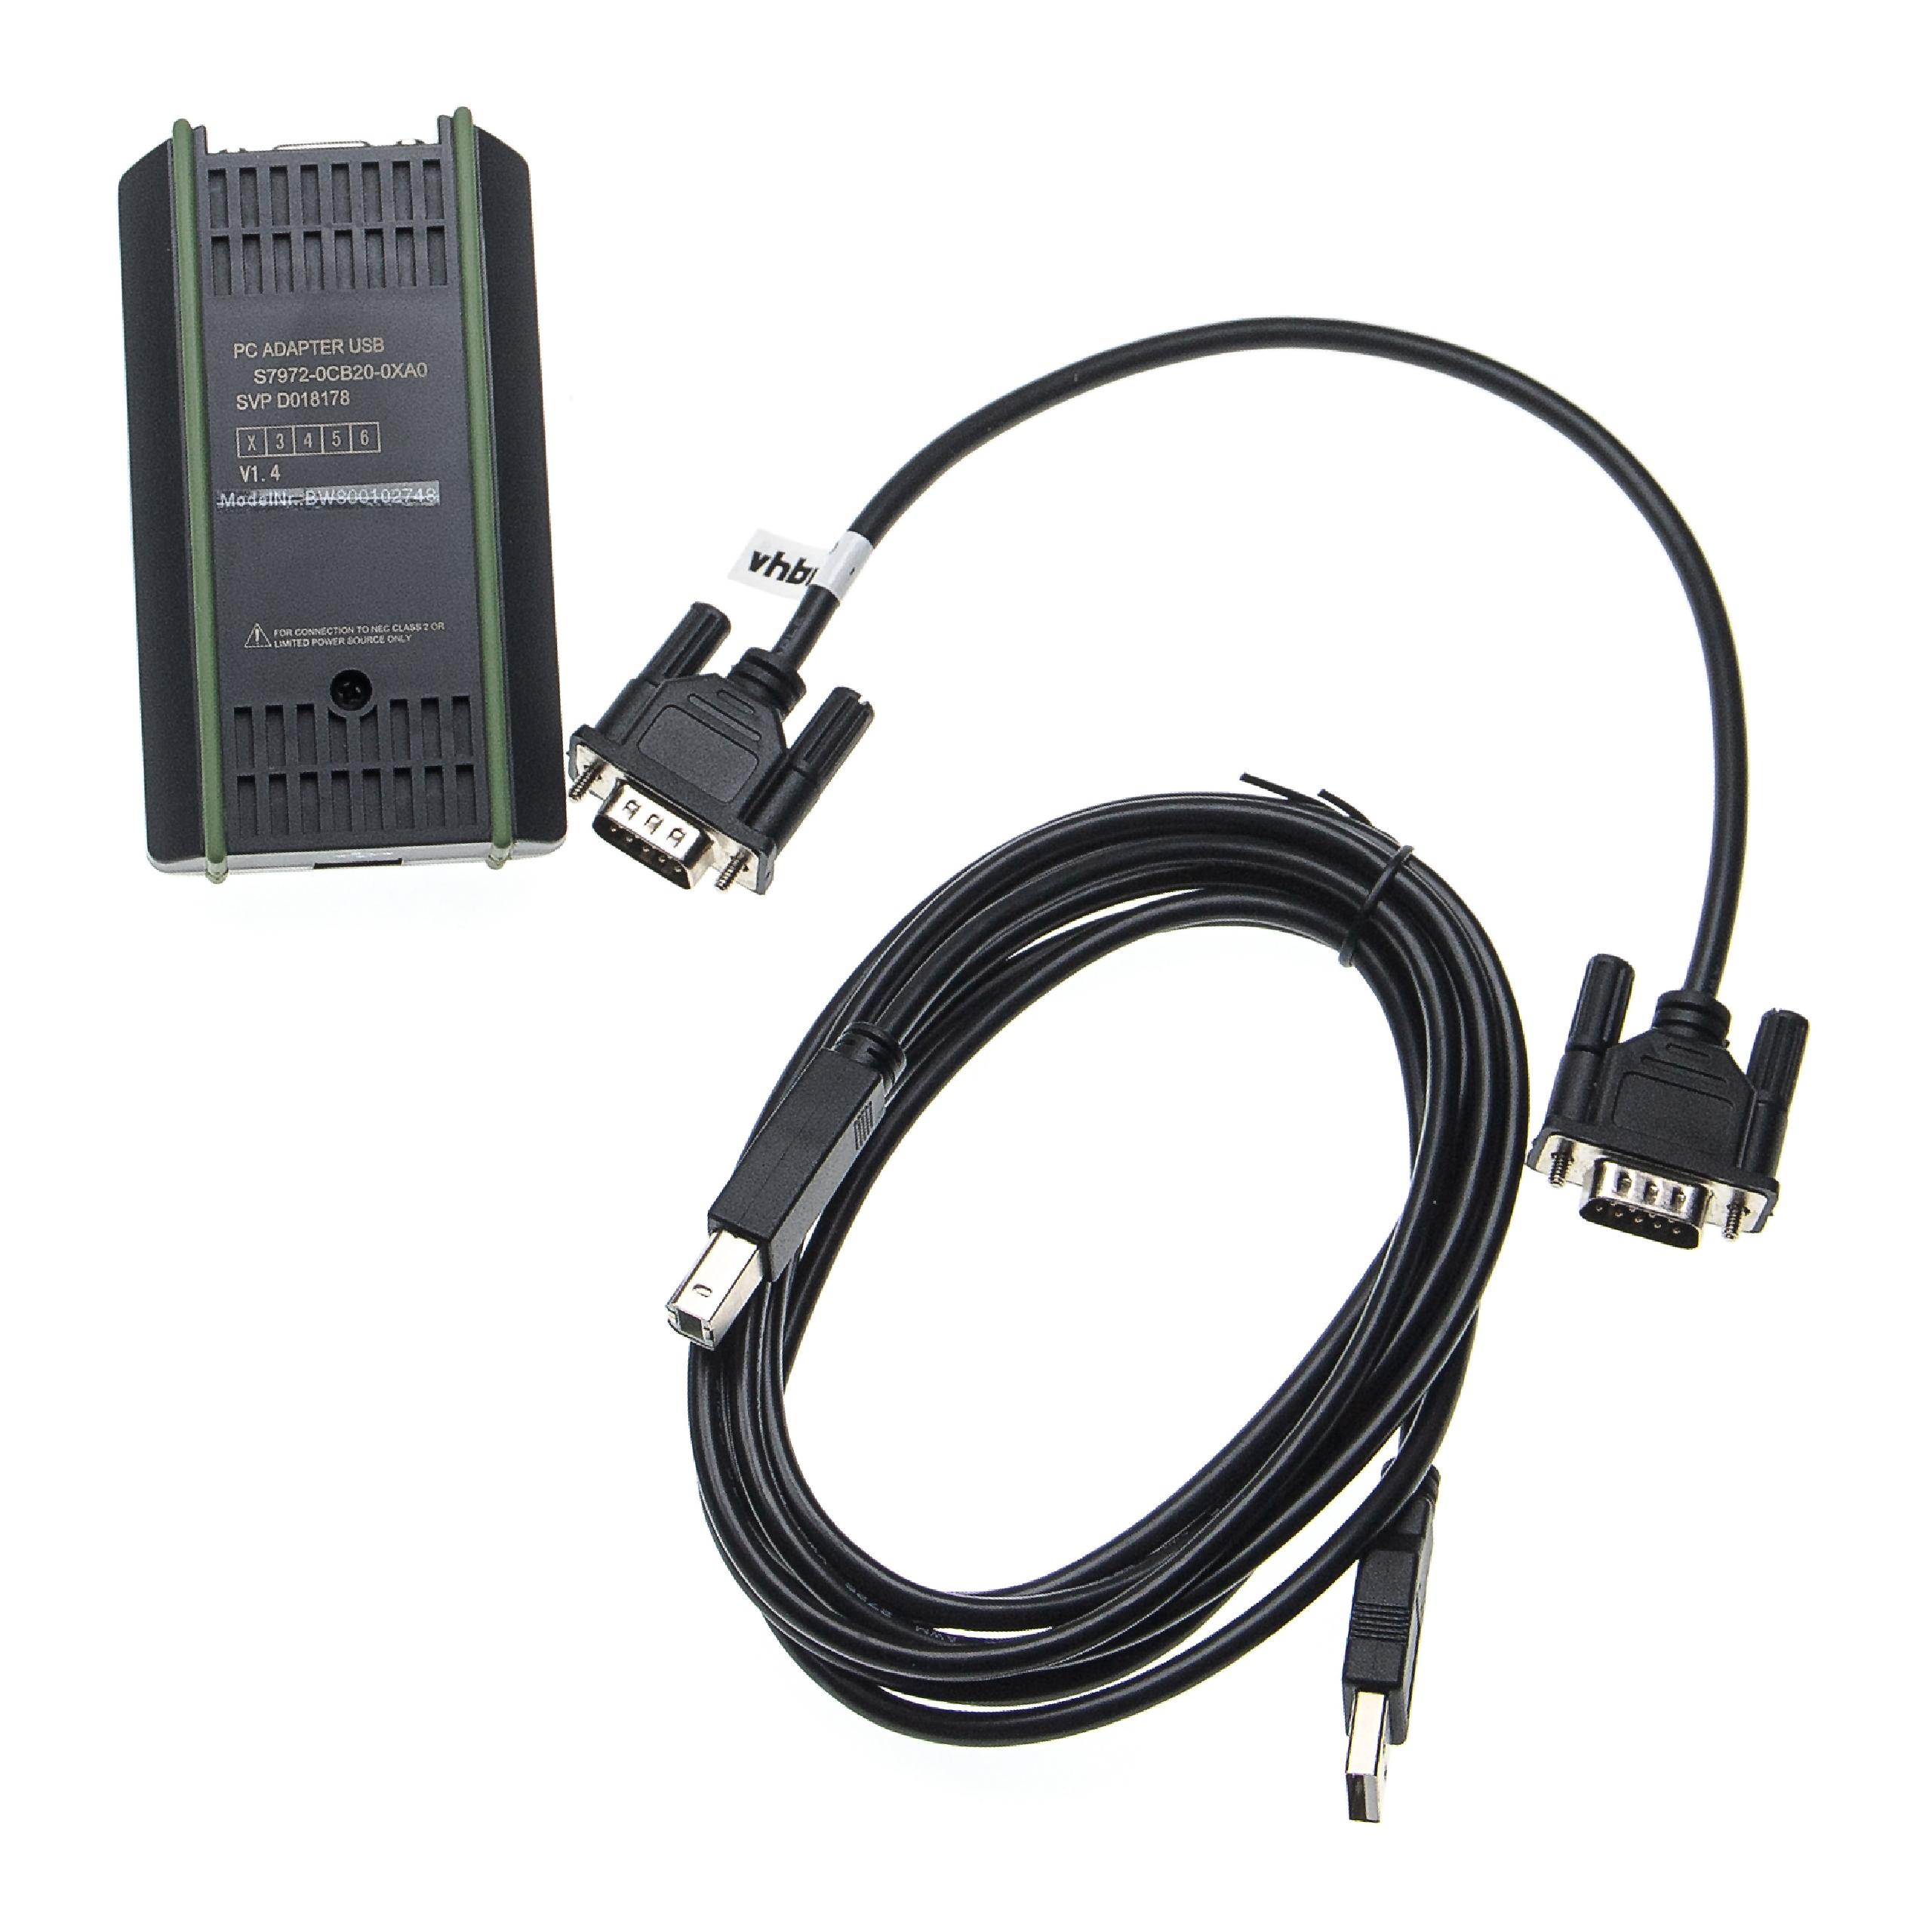 Programming Cable PLC, MPI replaces Siemens 6ES7 972-0CB20-0XA0 forRadio